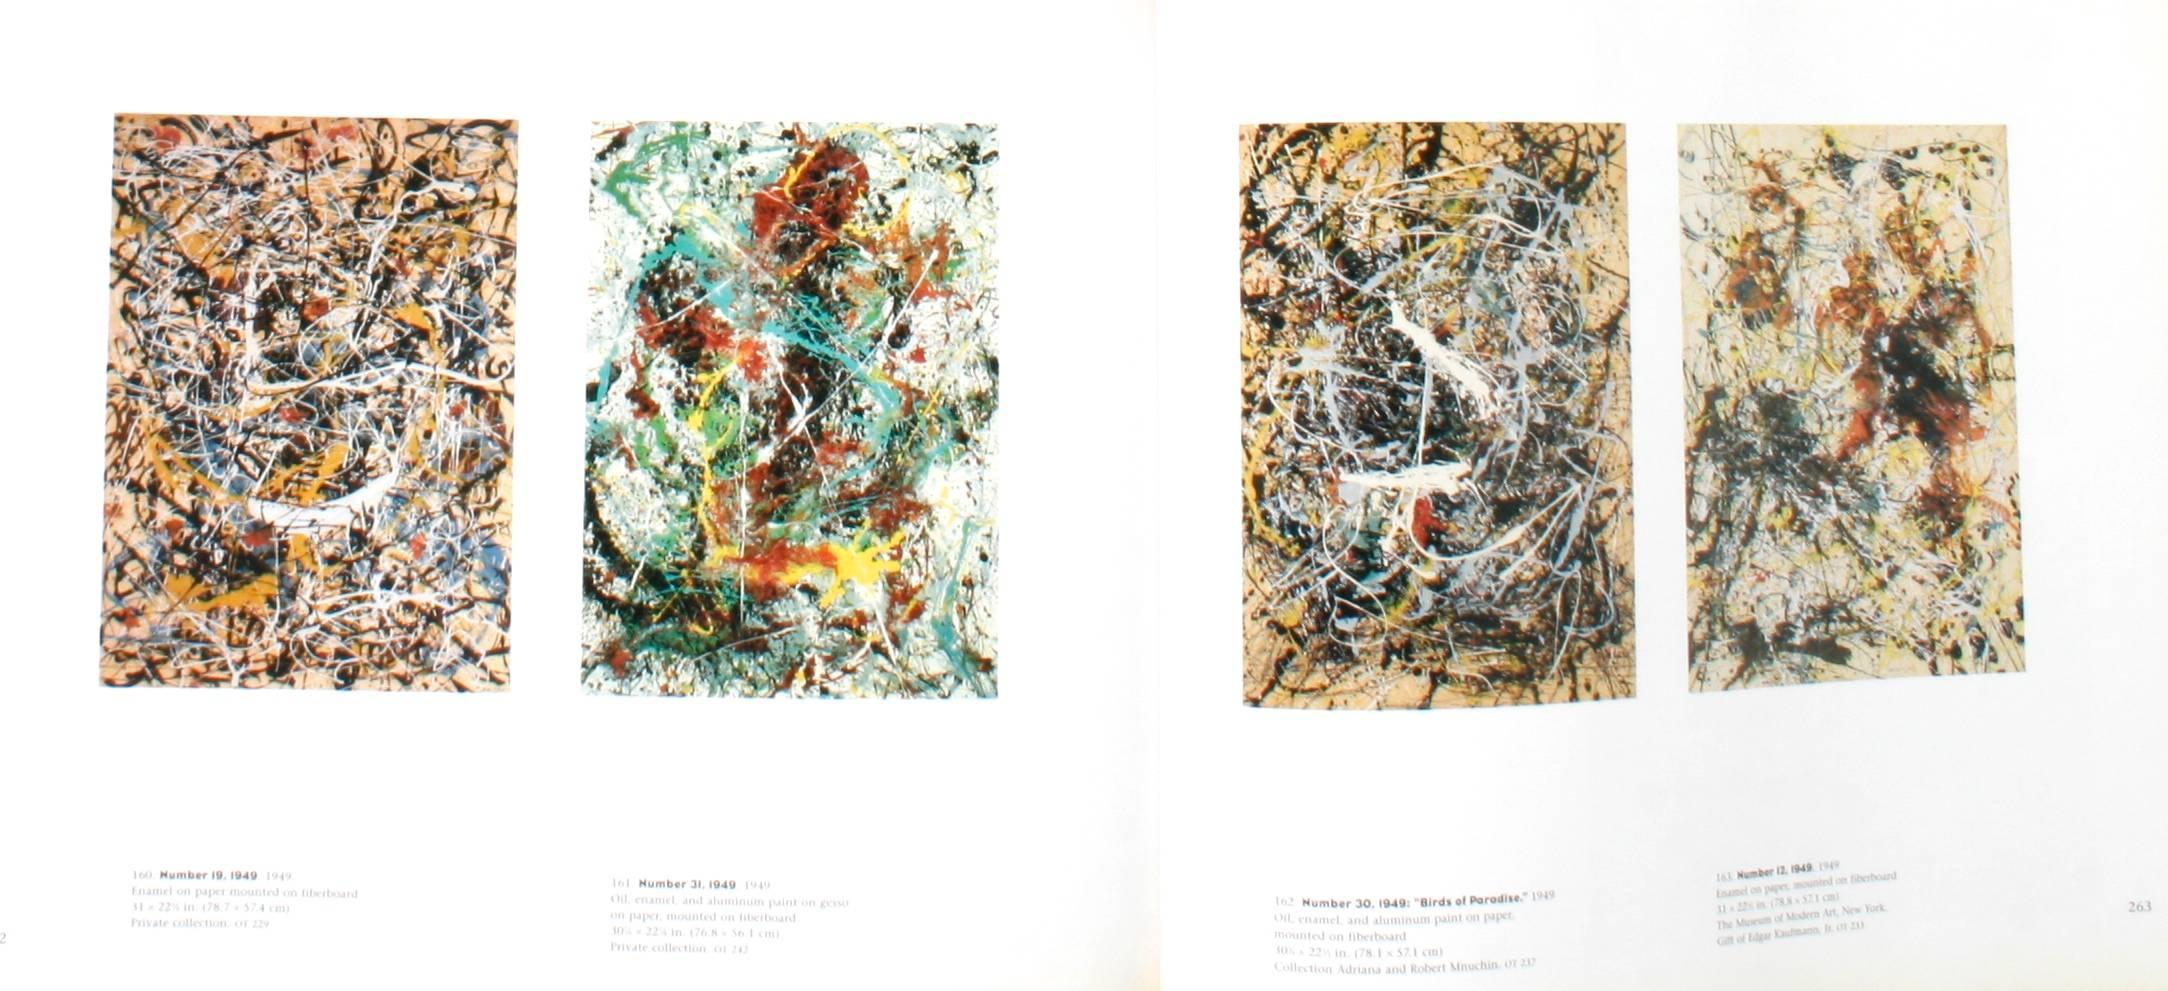 Jackson Pollock by Kirk Varnedoe and Pepe Karmel, First Edition 2